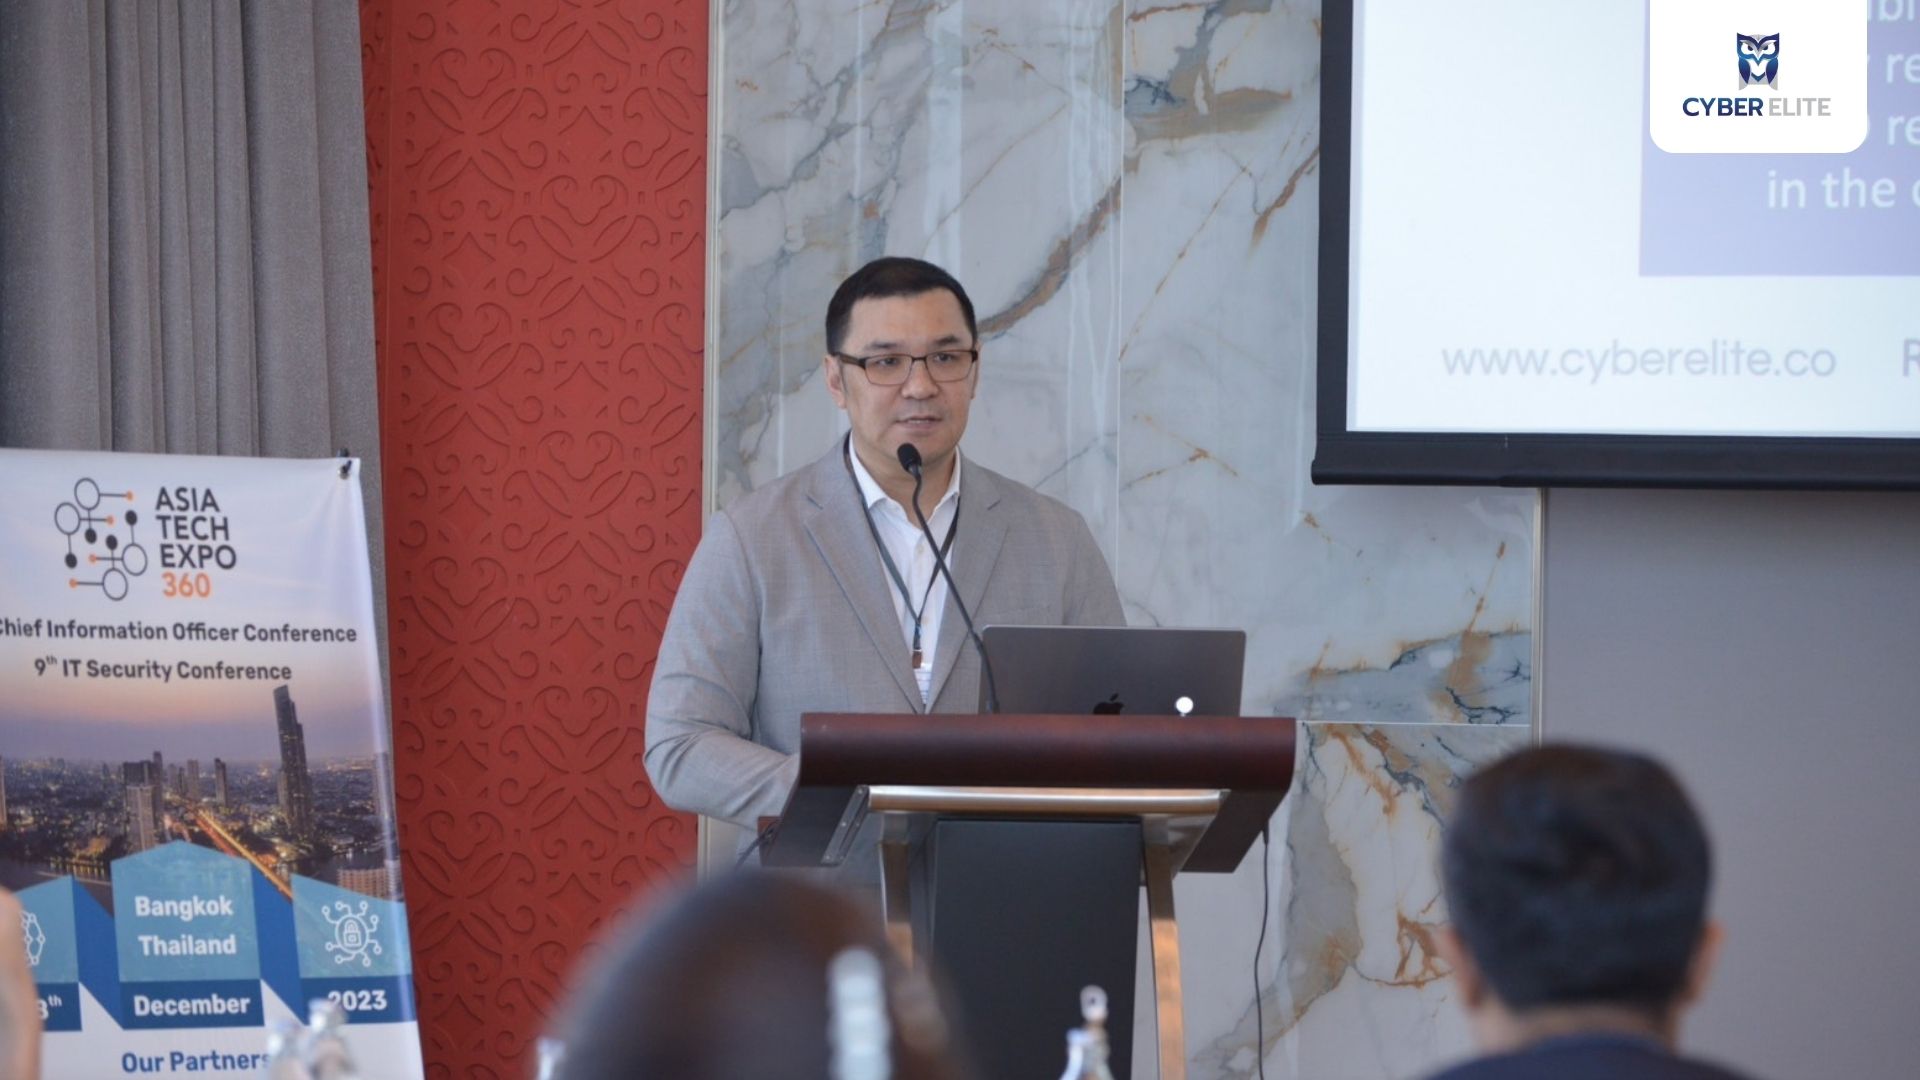 CYBER ELITE ได้รับเกียรติเป็นผู้บรรยายในงานประชุมด้านความปลอดภัยไอที ASIA TECH EXPO 360 ในหัวข้อ CIO and IT Security Conference Bangkok 2023